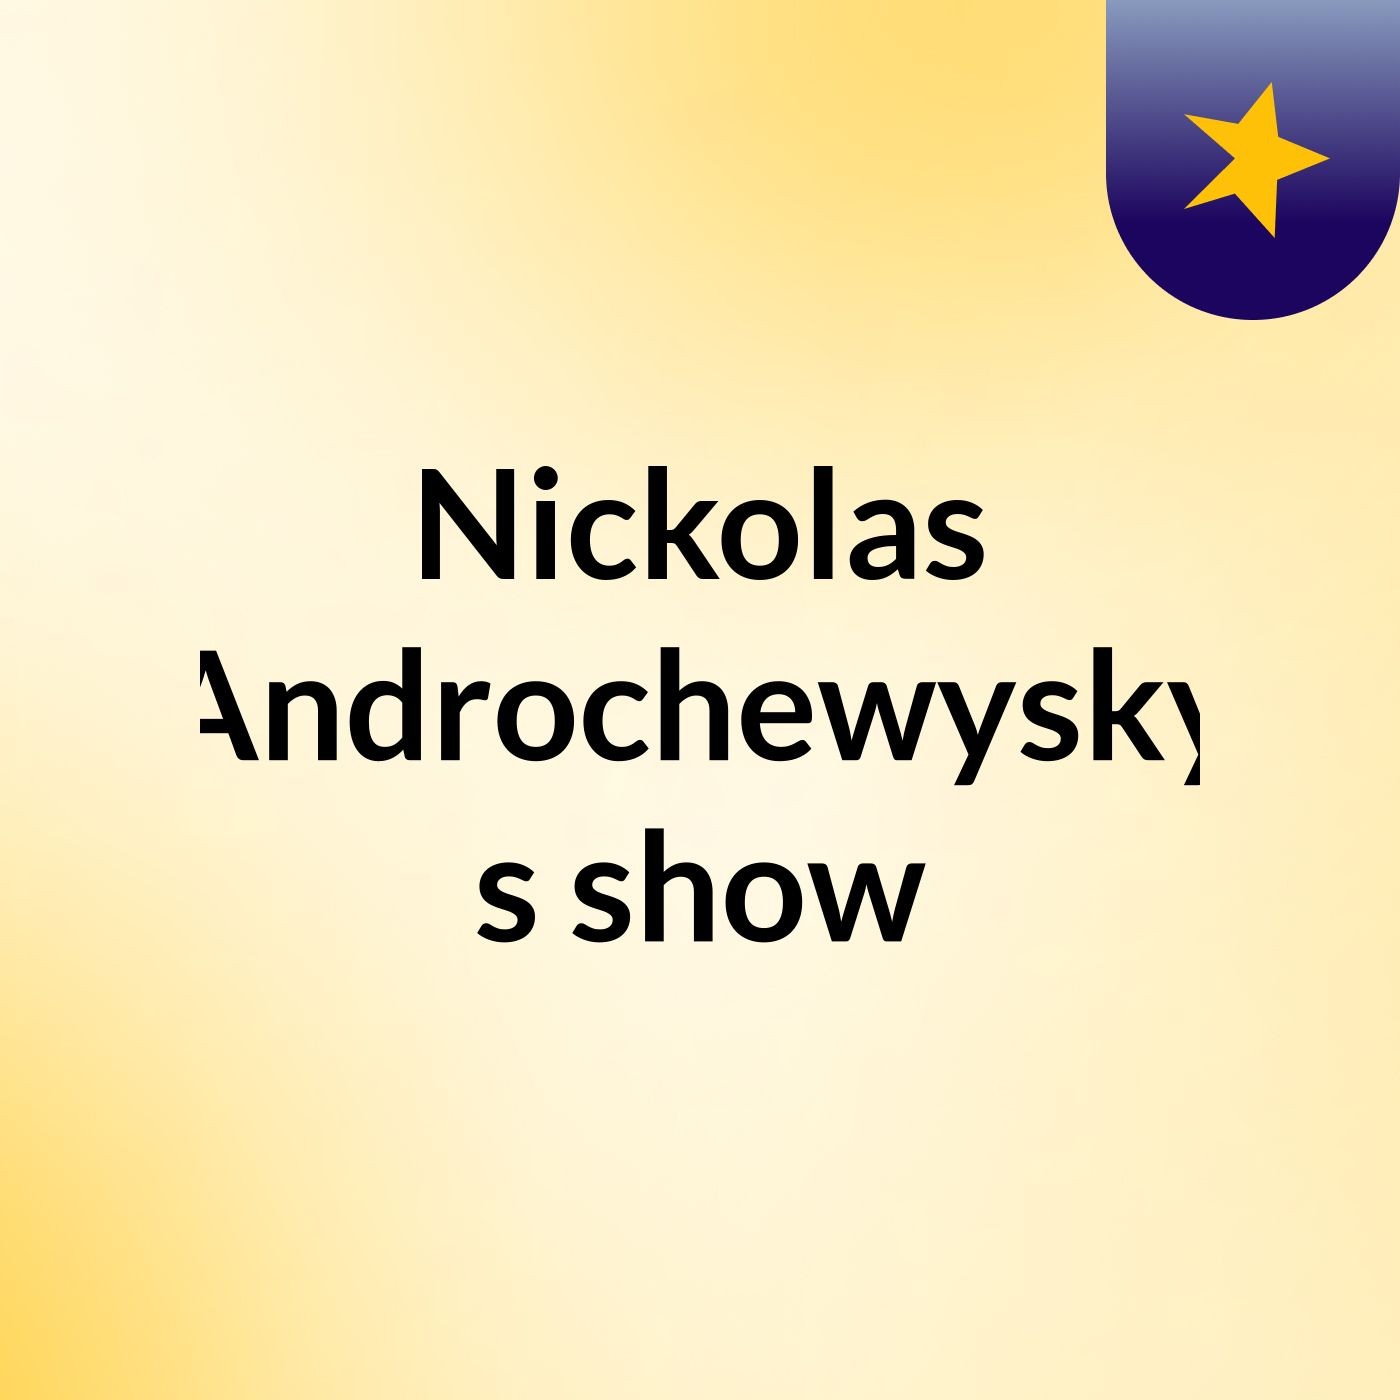 Nickolas Androchewysky's show